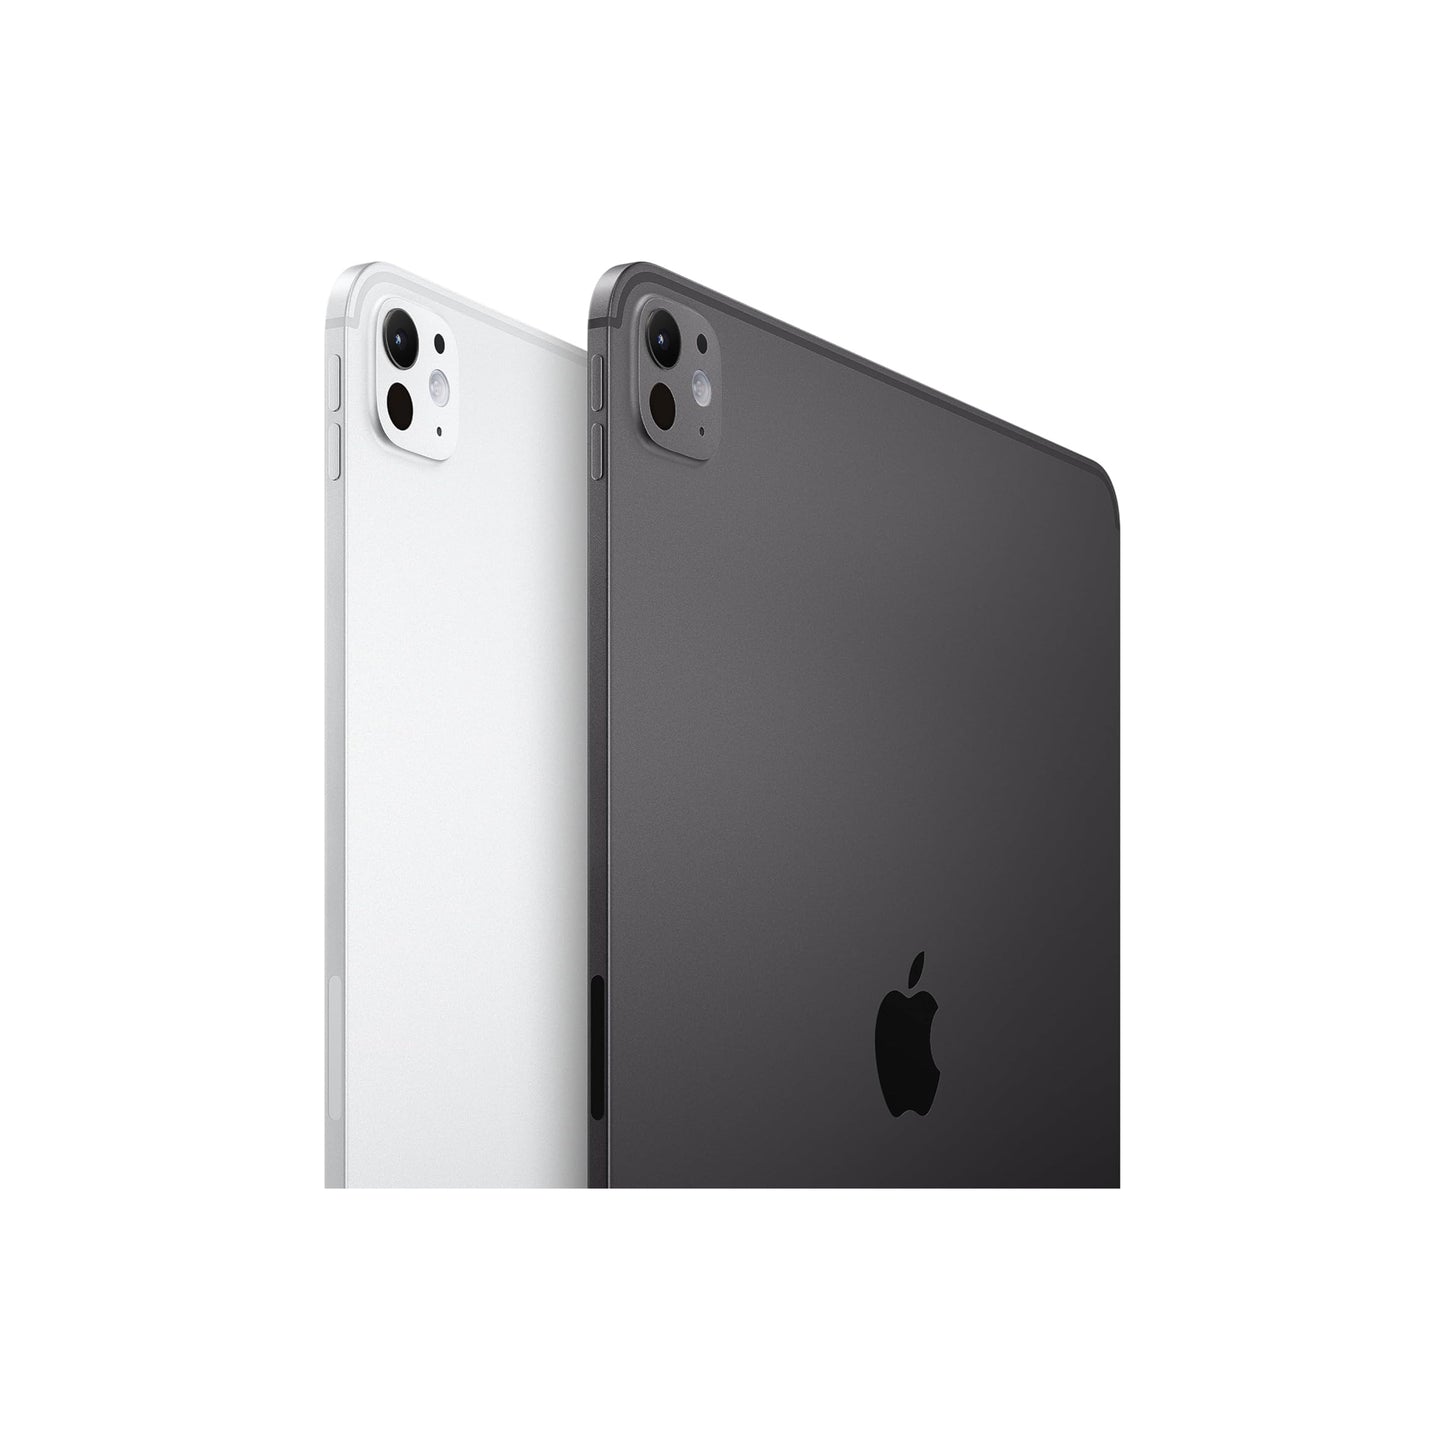 Apple iPad Pro 11 بوصة (M4): شاشة Ultra Retina XDR - زجاج نانو، 2 تيرابايت، كاميرا أمامية 12 ميجابكسل / كاميرا خلفية 12 ميجابكسل، ماسح ضوئي LiDAR، Wi-Fi 6E + 5G خلوي مع eSIM، معرف الوجه - فضي